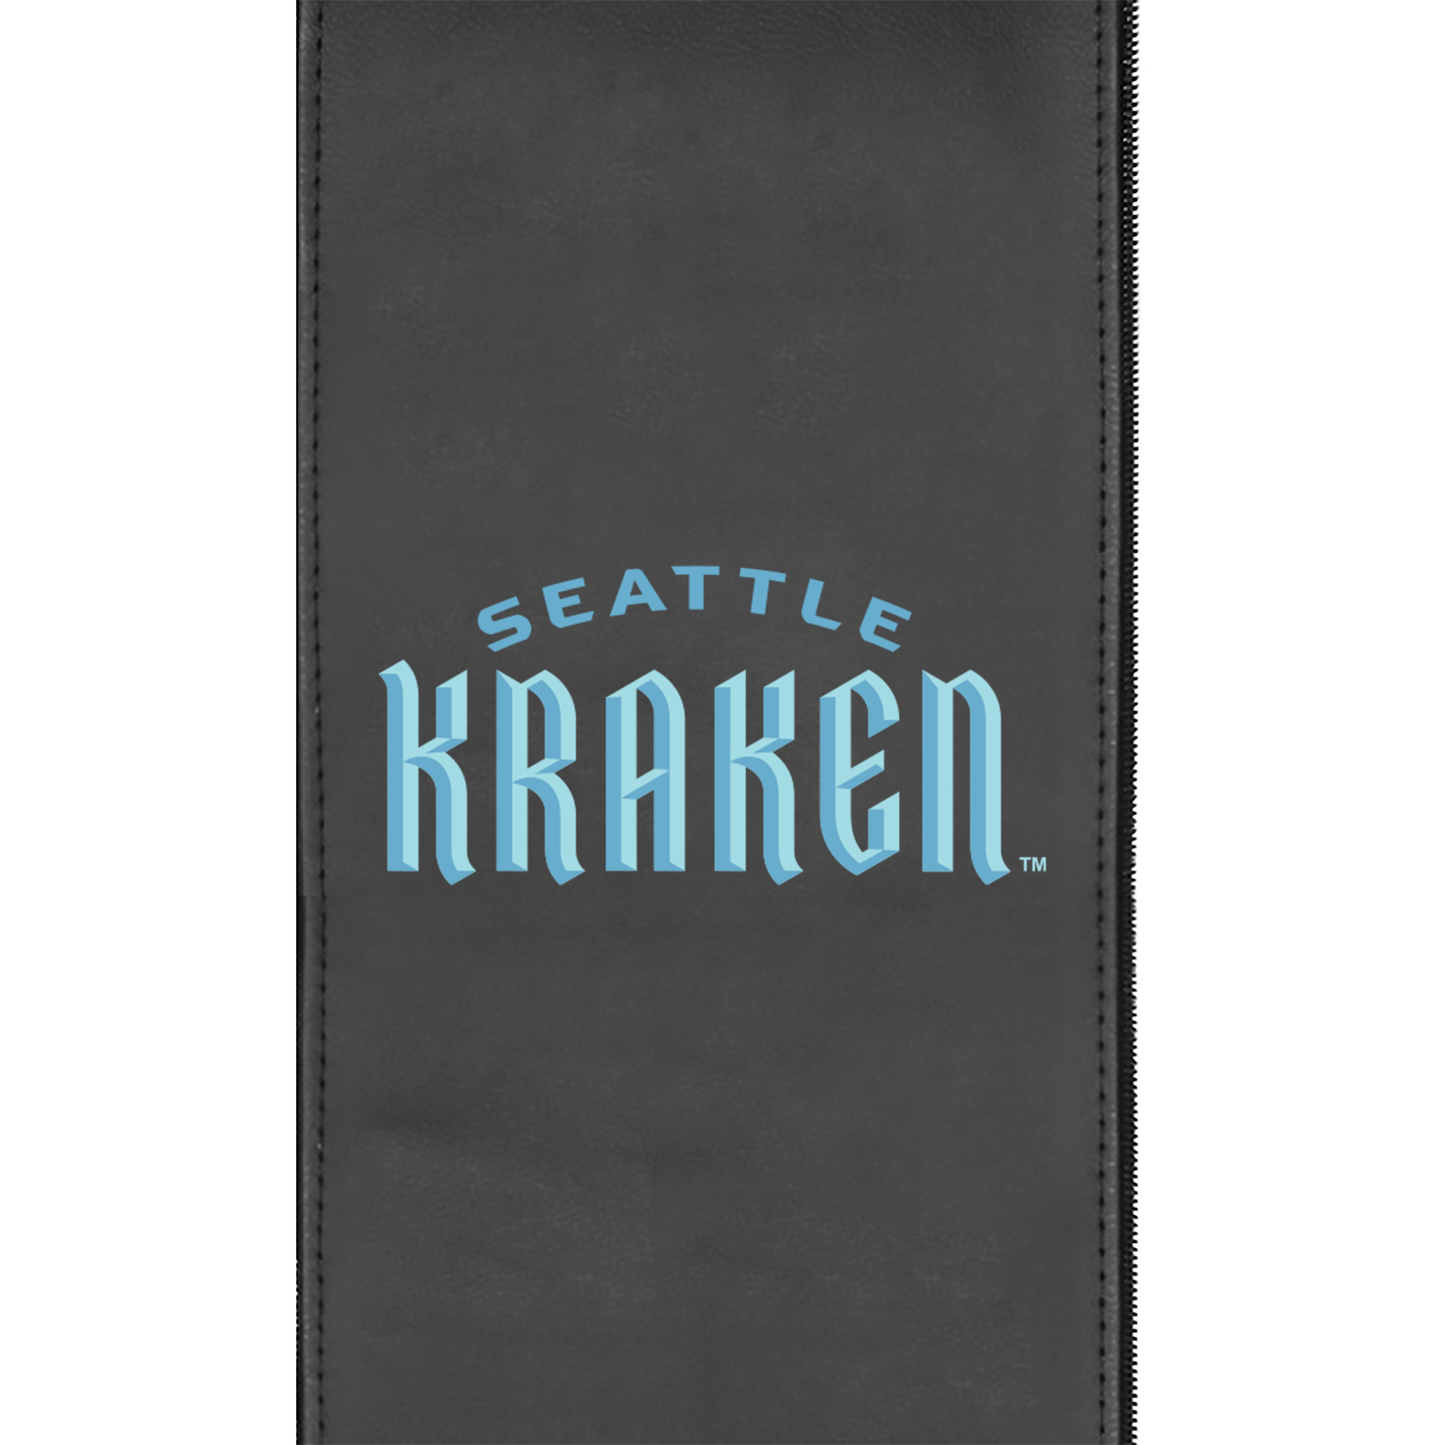 Silver Club Chair with Seattle Kraken Alternate Logo